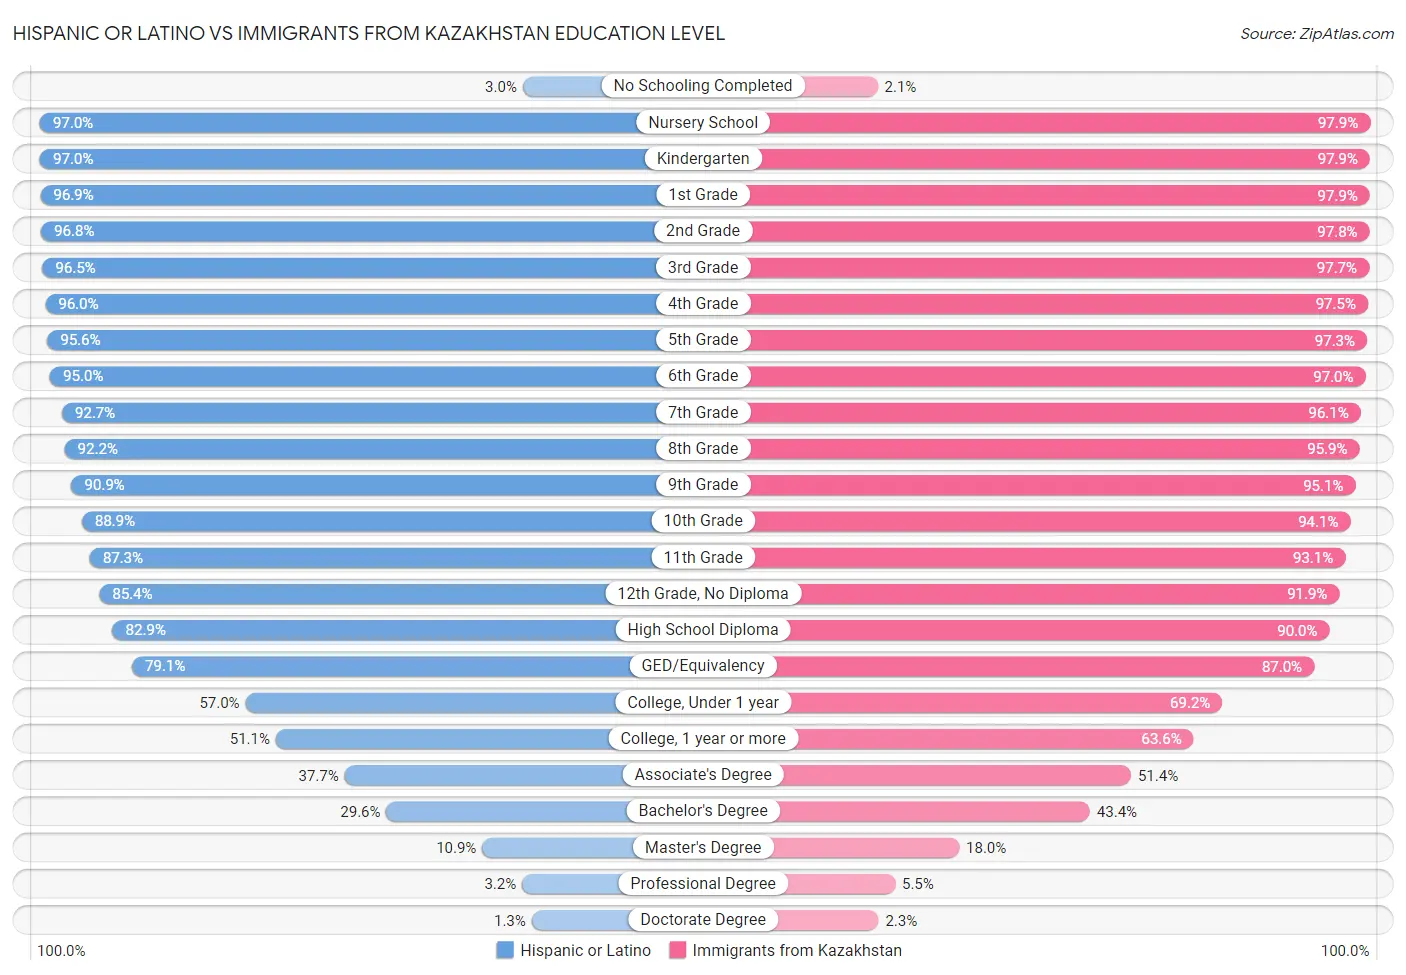 Hispanic or Latino vs Immigrants from Kazakhstan Education Level